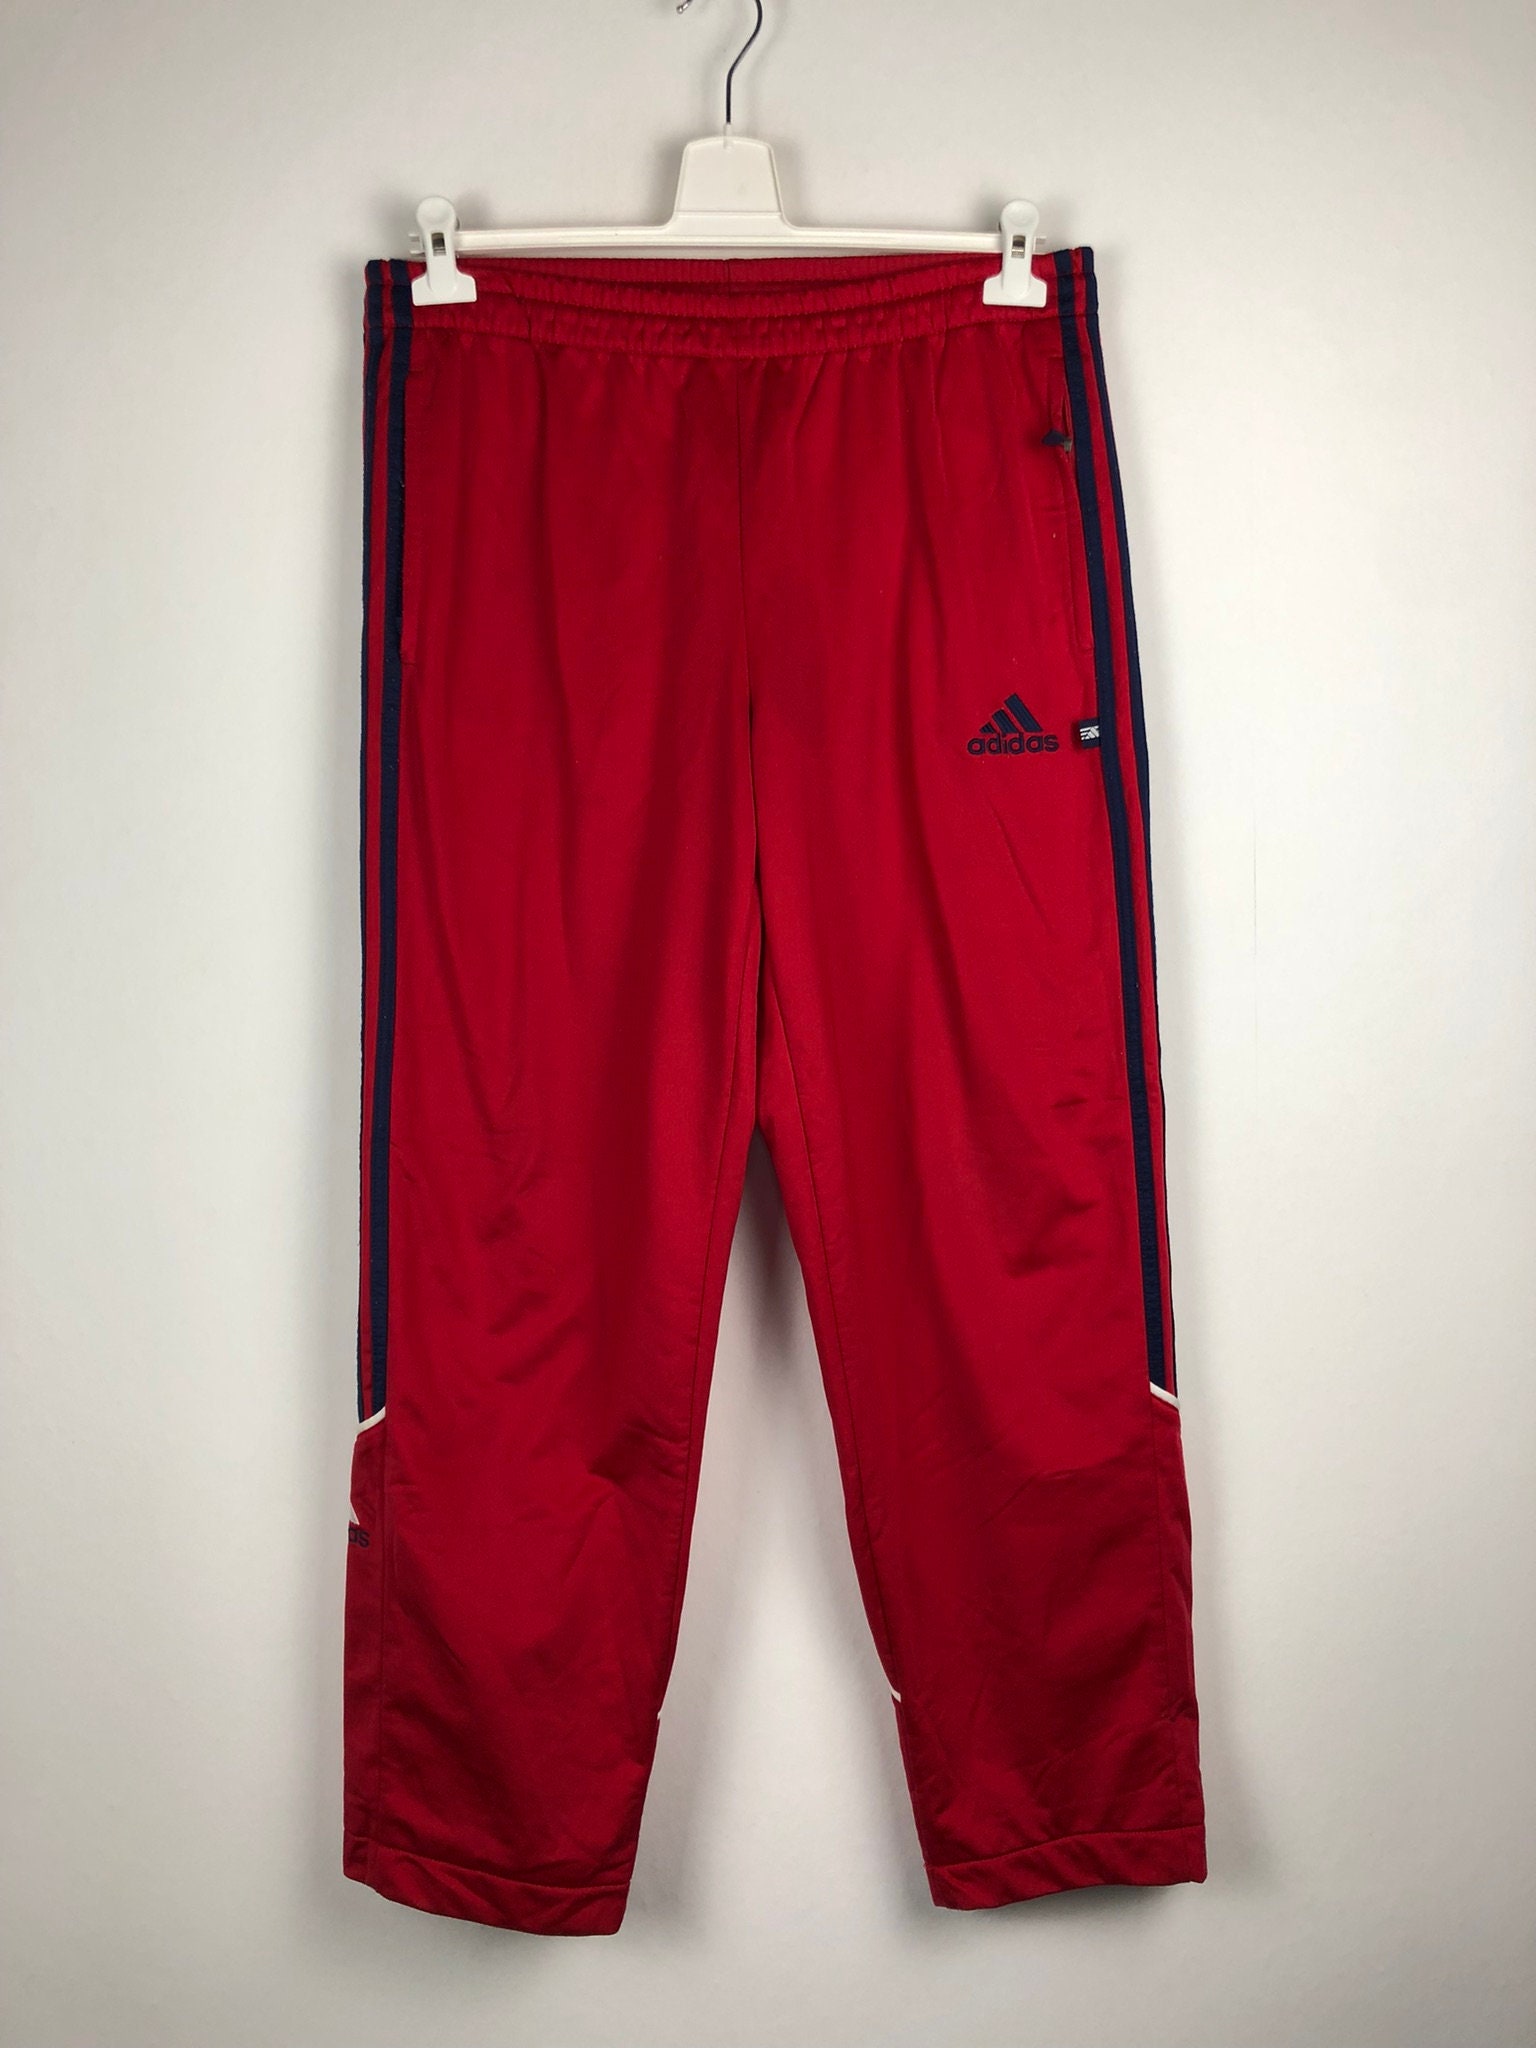 Red Adidas Pants 